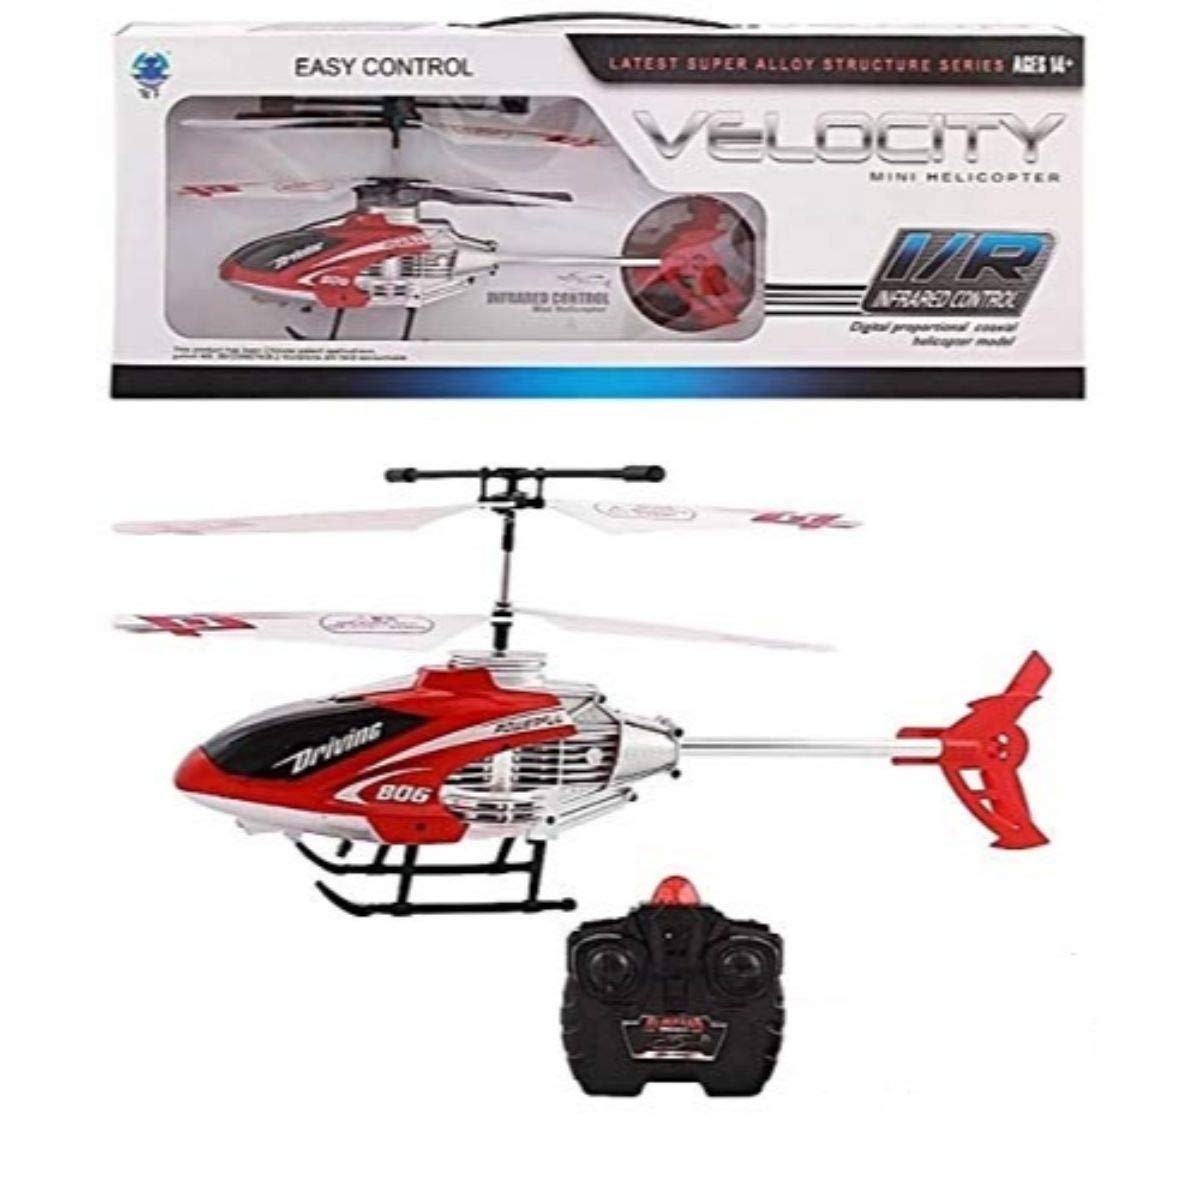 Remote Control Helicopter Ki Price: Top Brands for Remote Control Helicopter Prices in India